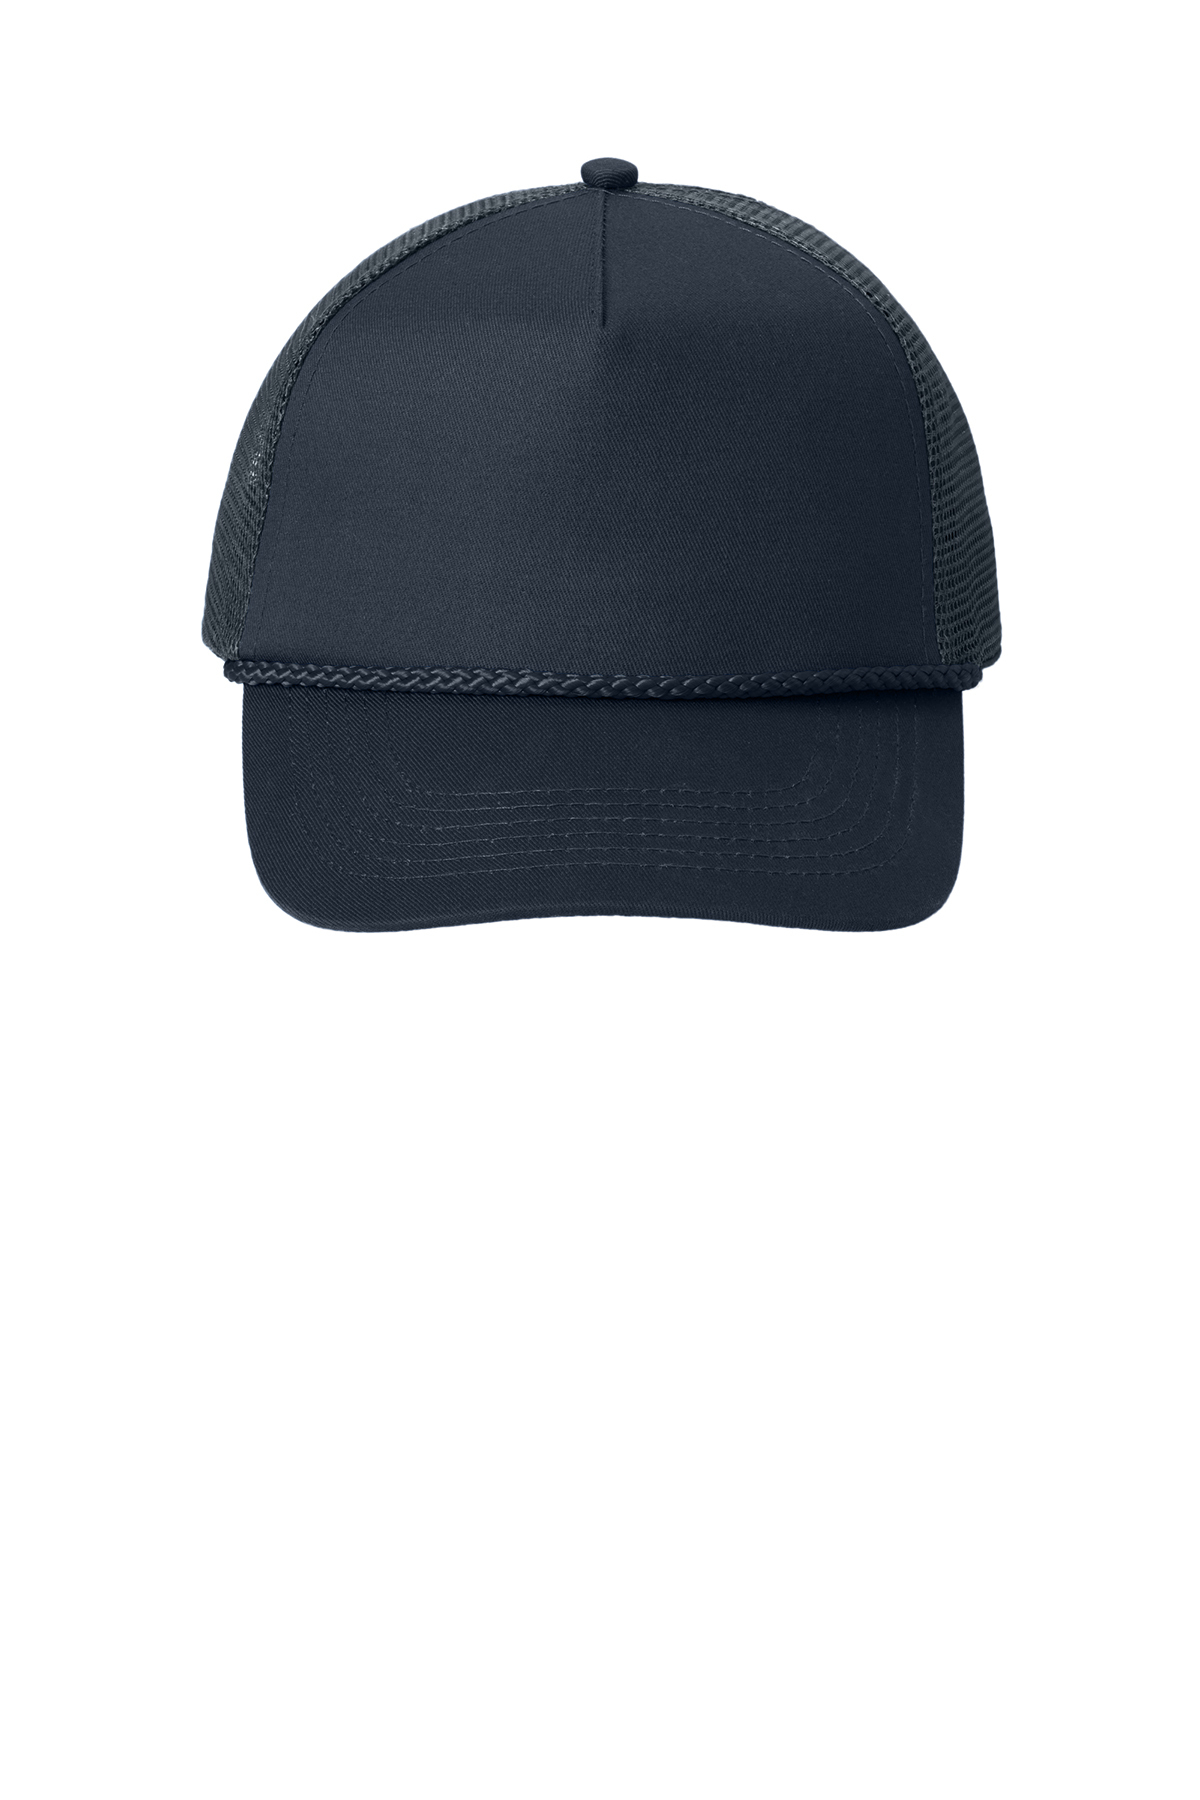 Team Fans, Accessories, New Uc San Diego Tritons Trident Logo 5 Panel  Camper Strapback Hat Navy